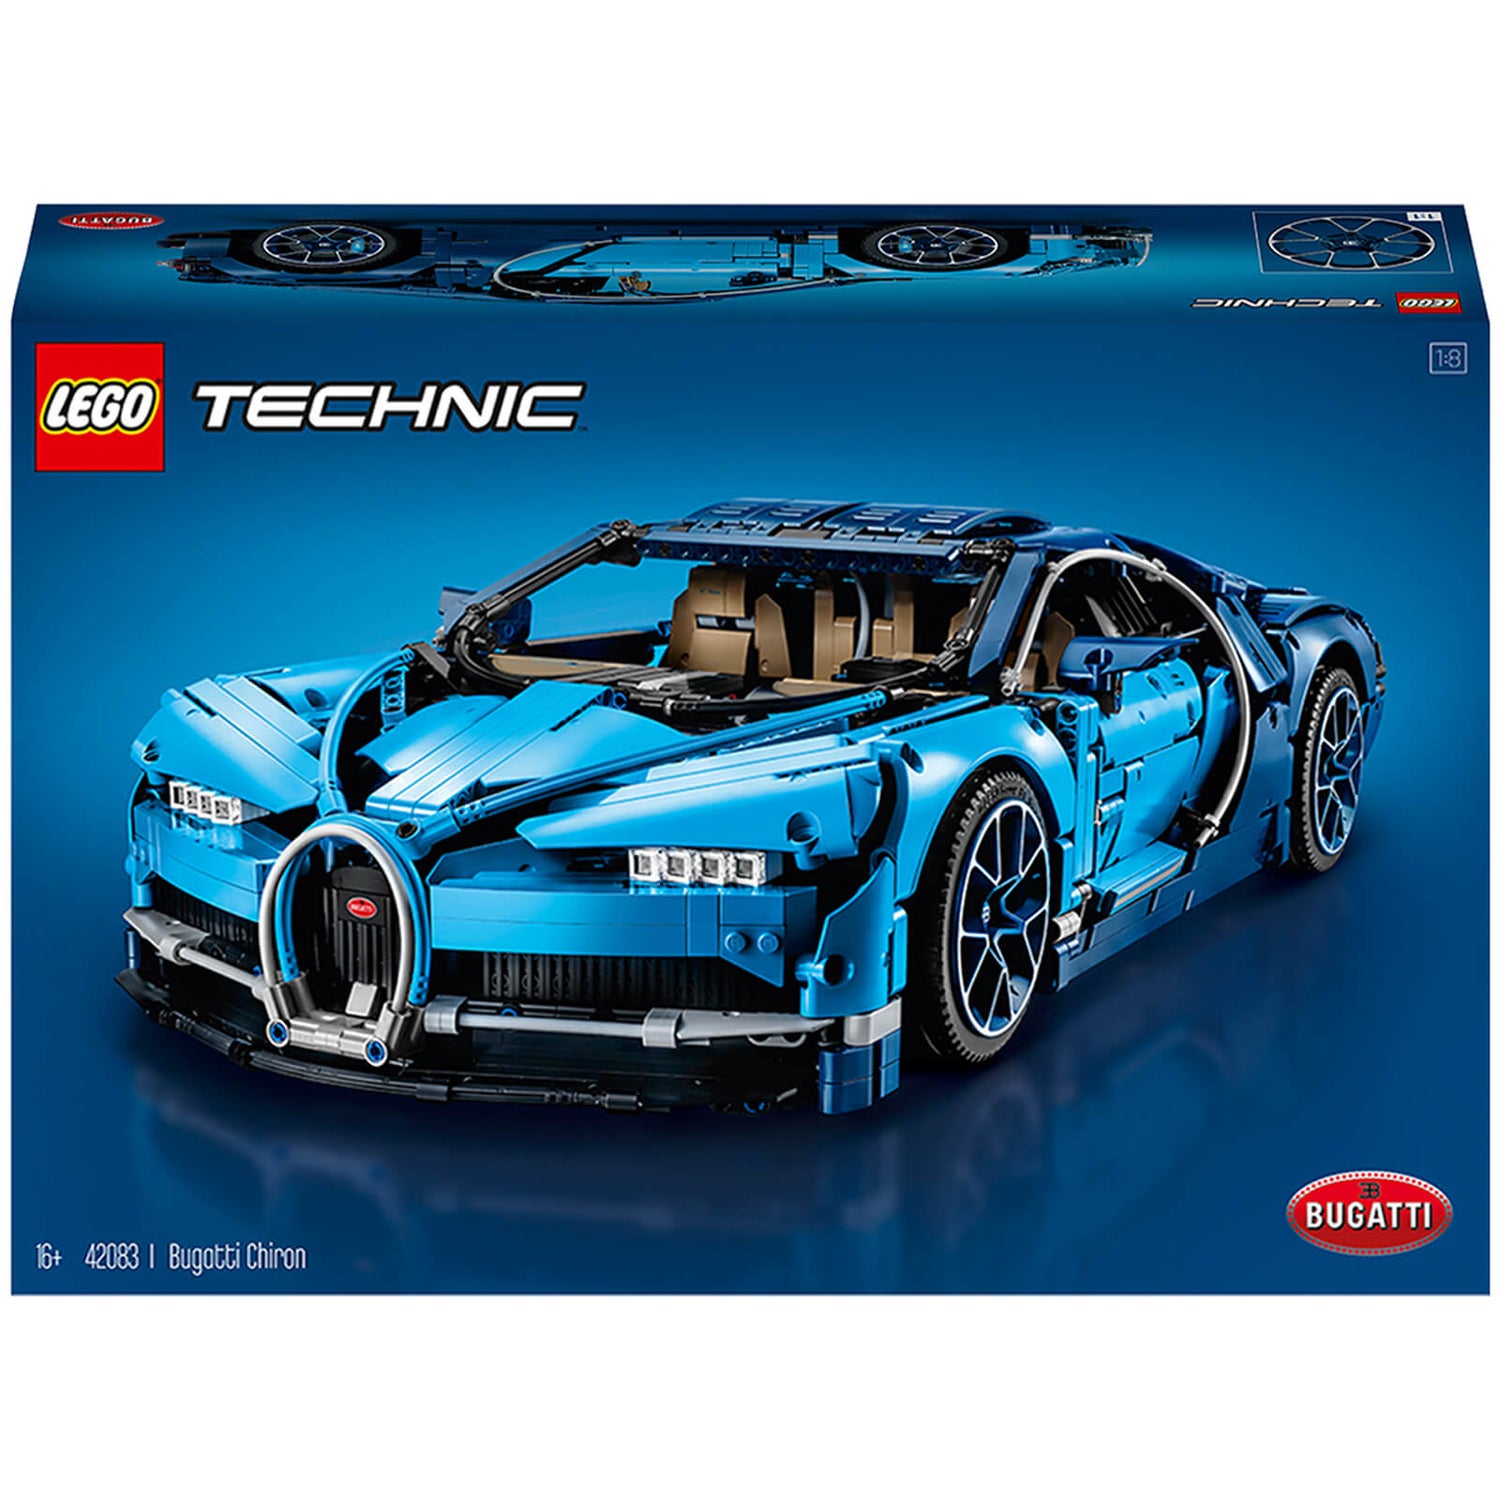 Ja Overfrakke kalk LEGO Technic: Bugatti Chiron Sports Race Car Model (42083) Toys - Zavvi US